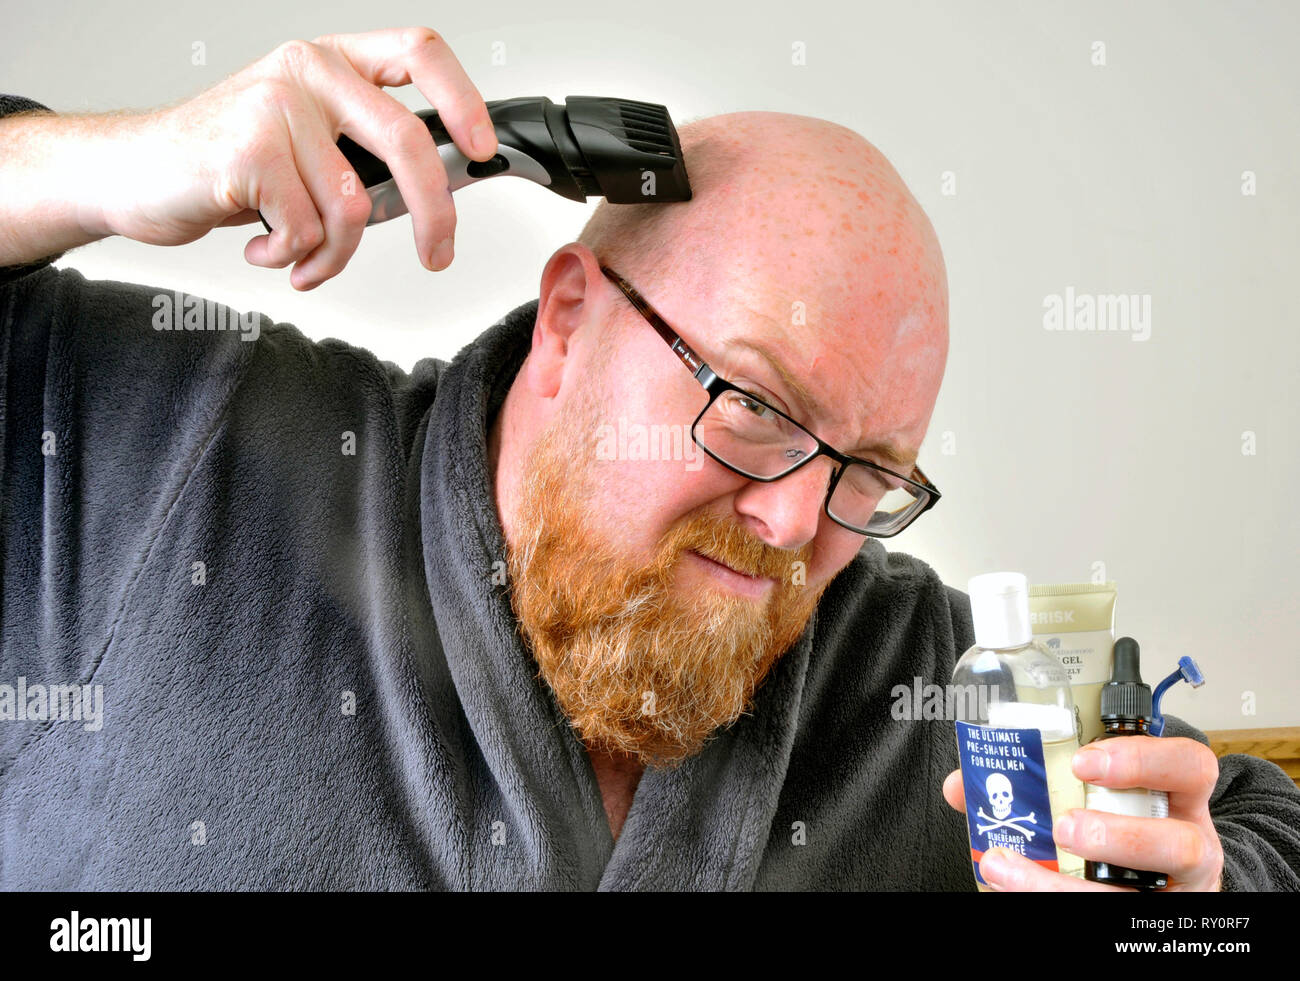 Bald man shaving Stock Photo